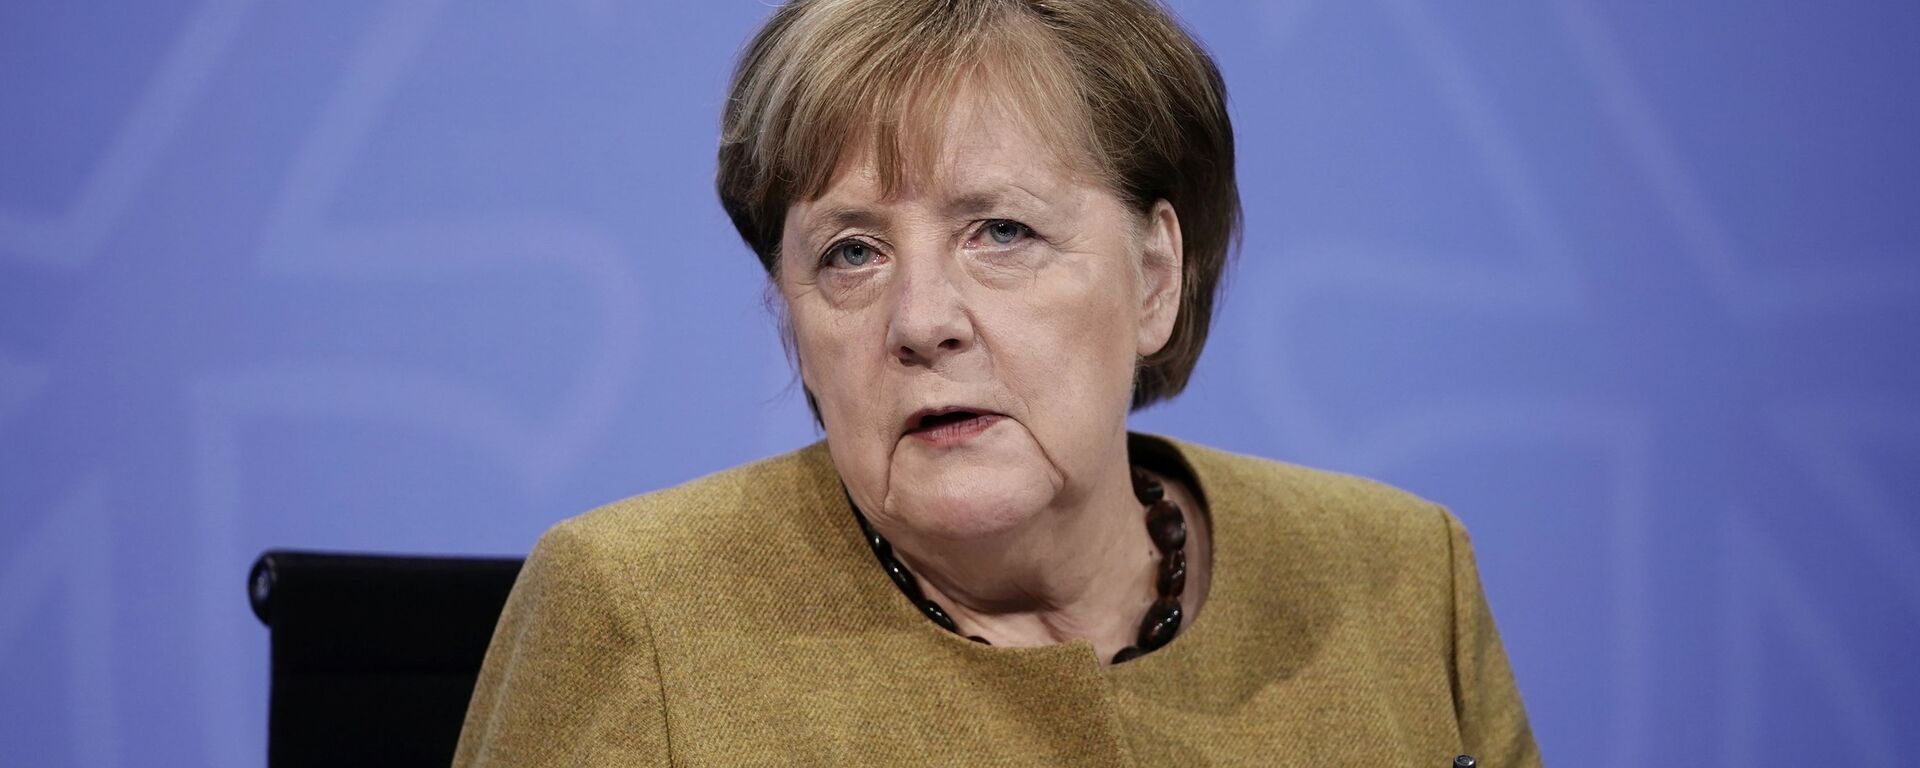 Angela Merkel, canciller alemana - Sputnik Mundo, 1920, 17.01.2021